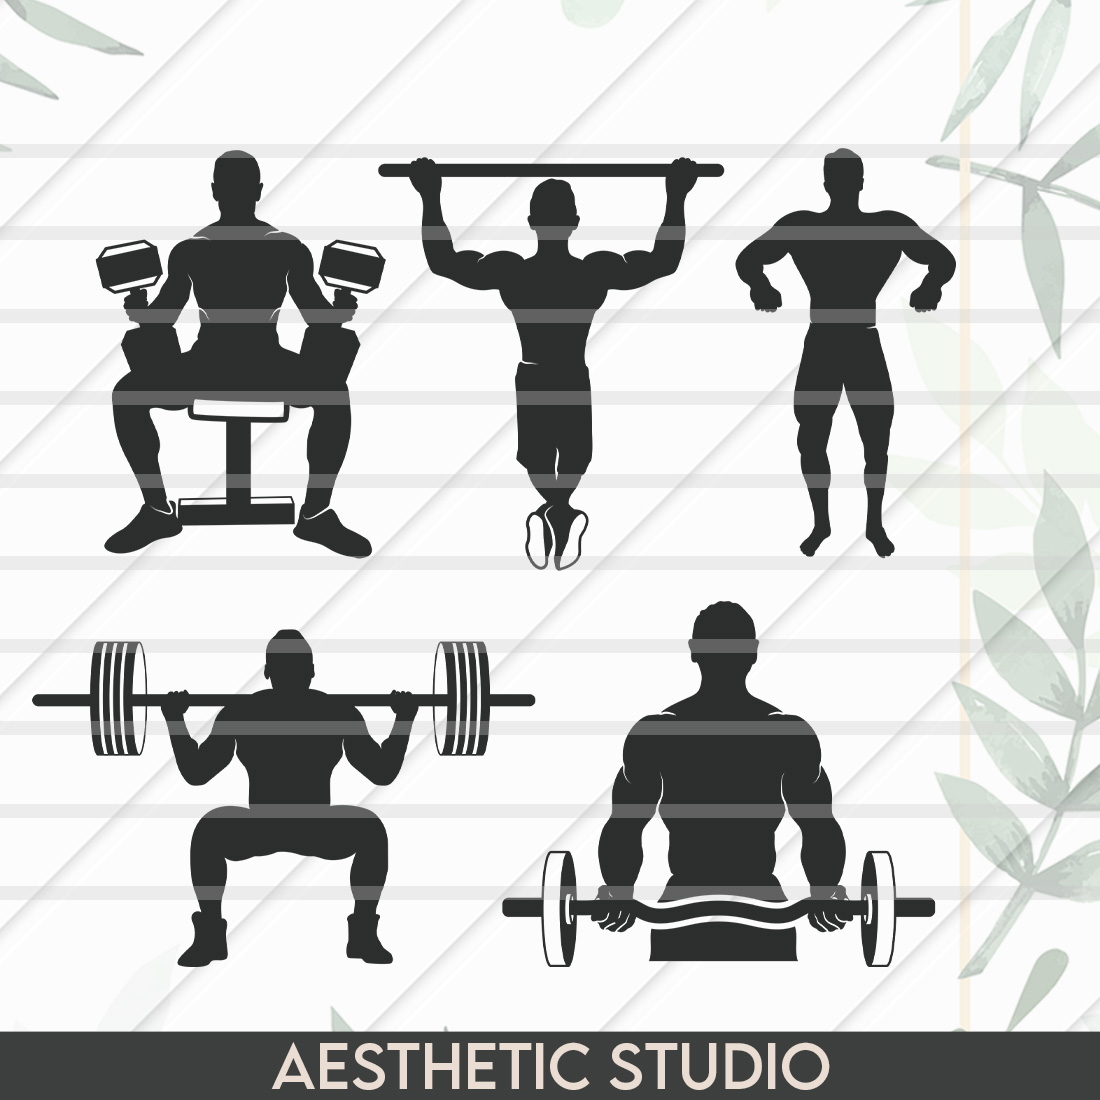 Bodybuilder SVG, Gym Svg, Muscle Man Svg, Workout Svg, Bodybuilder Clipart, Fitness Svg, Muscle Man Vector, Silhoette, Weights Svg, Dxf, Png, Eps, Cut file preview image.